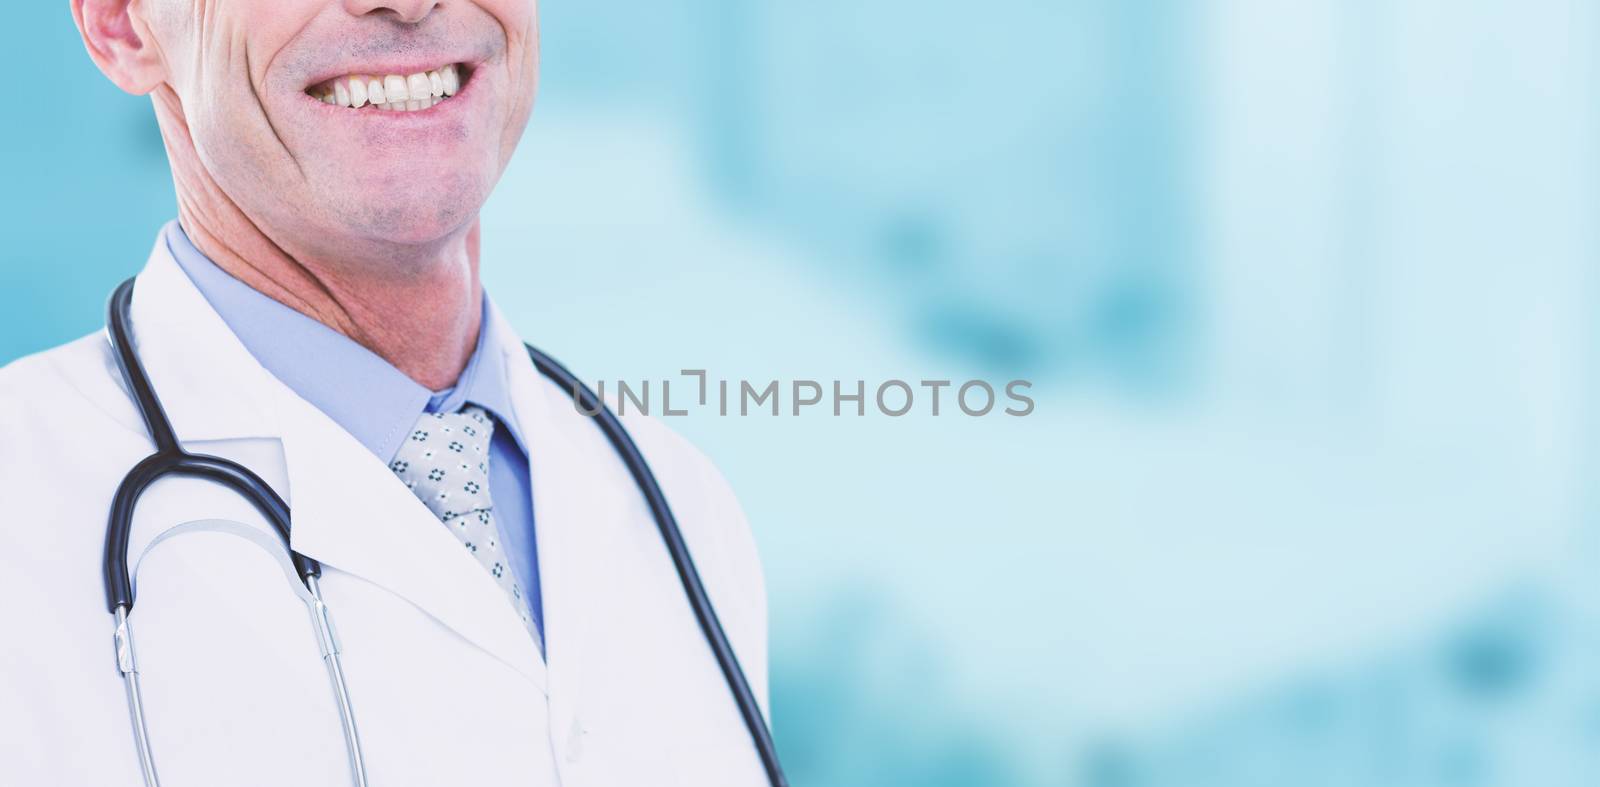 Portrait of male doctor smiling against dental equipment